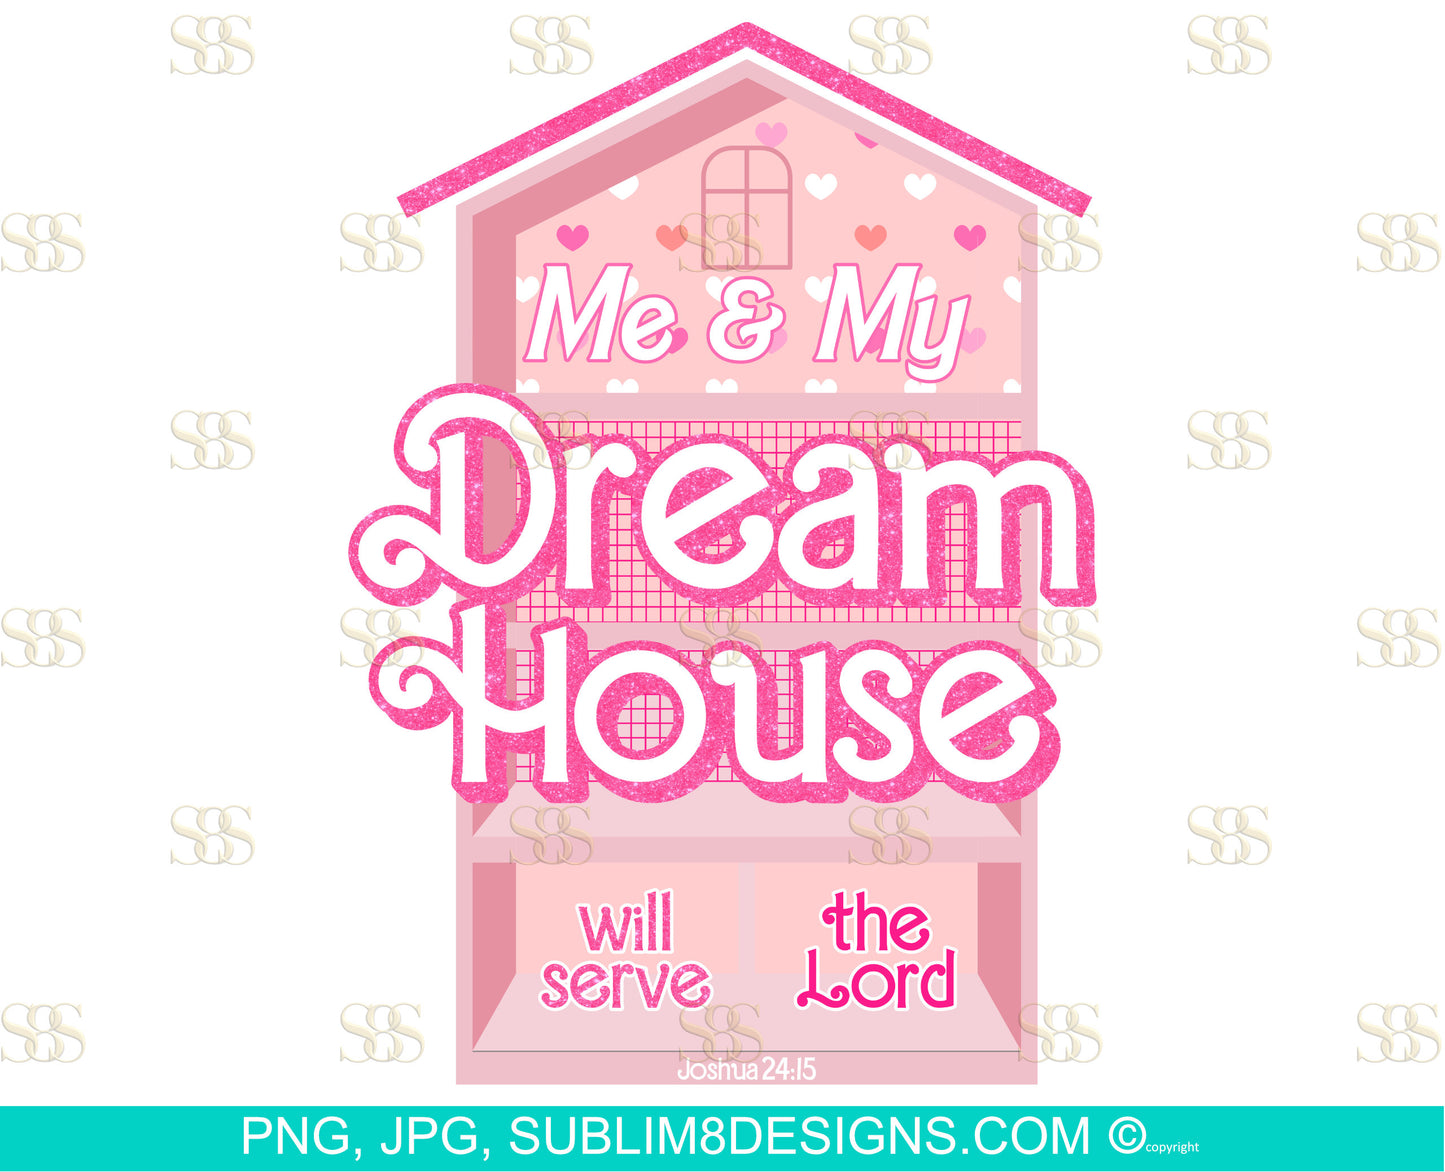 Barbie Me & My Dream House